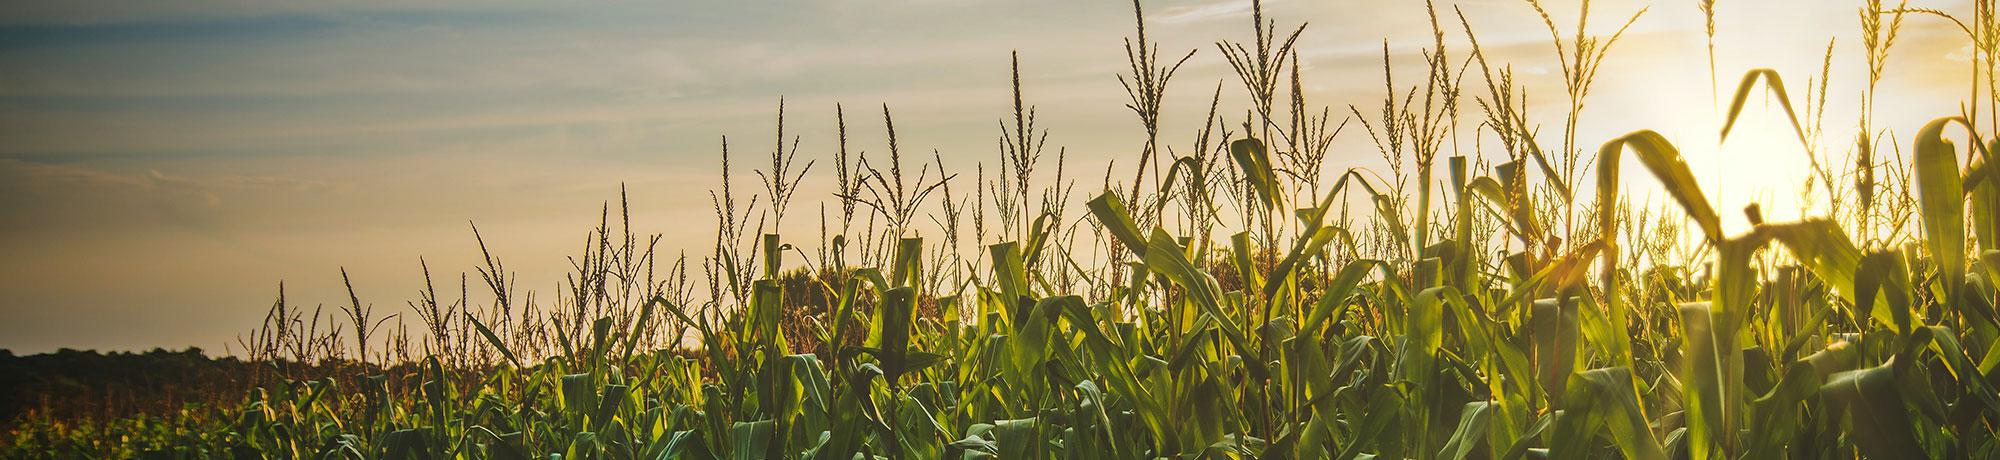 Field of Corn at sunrise